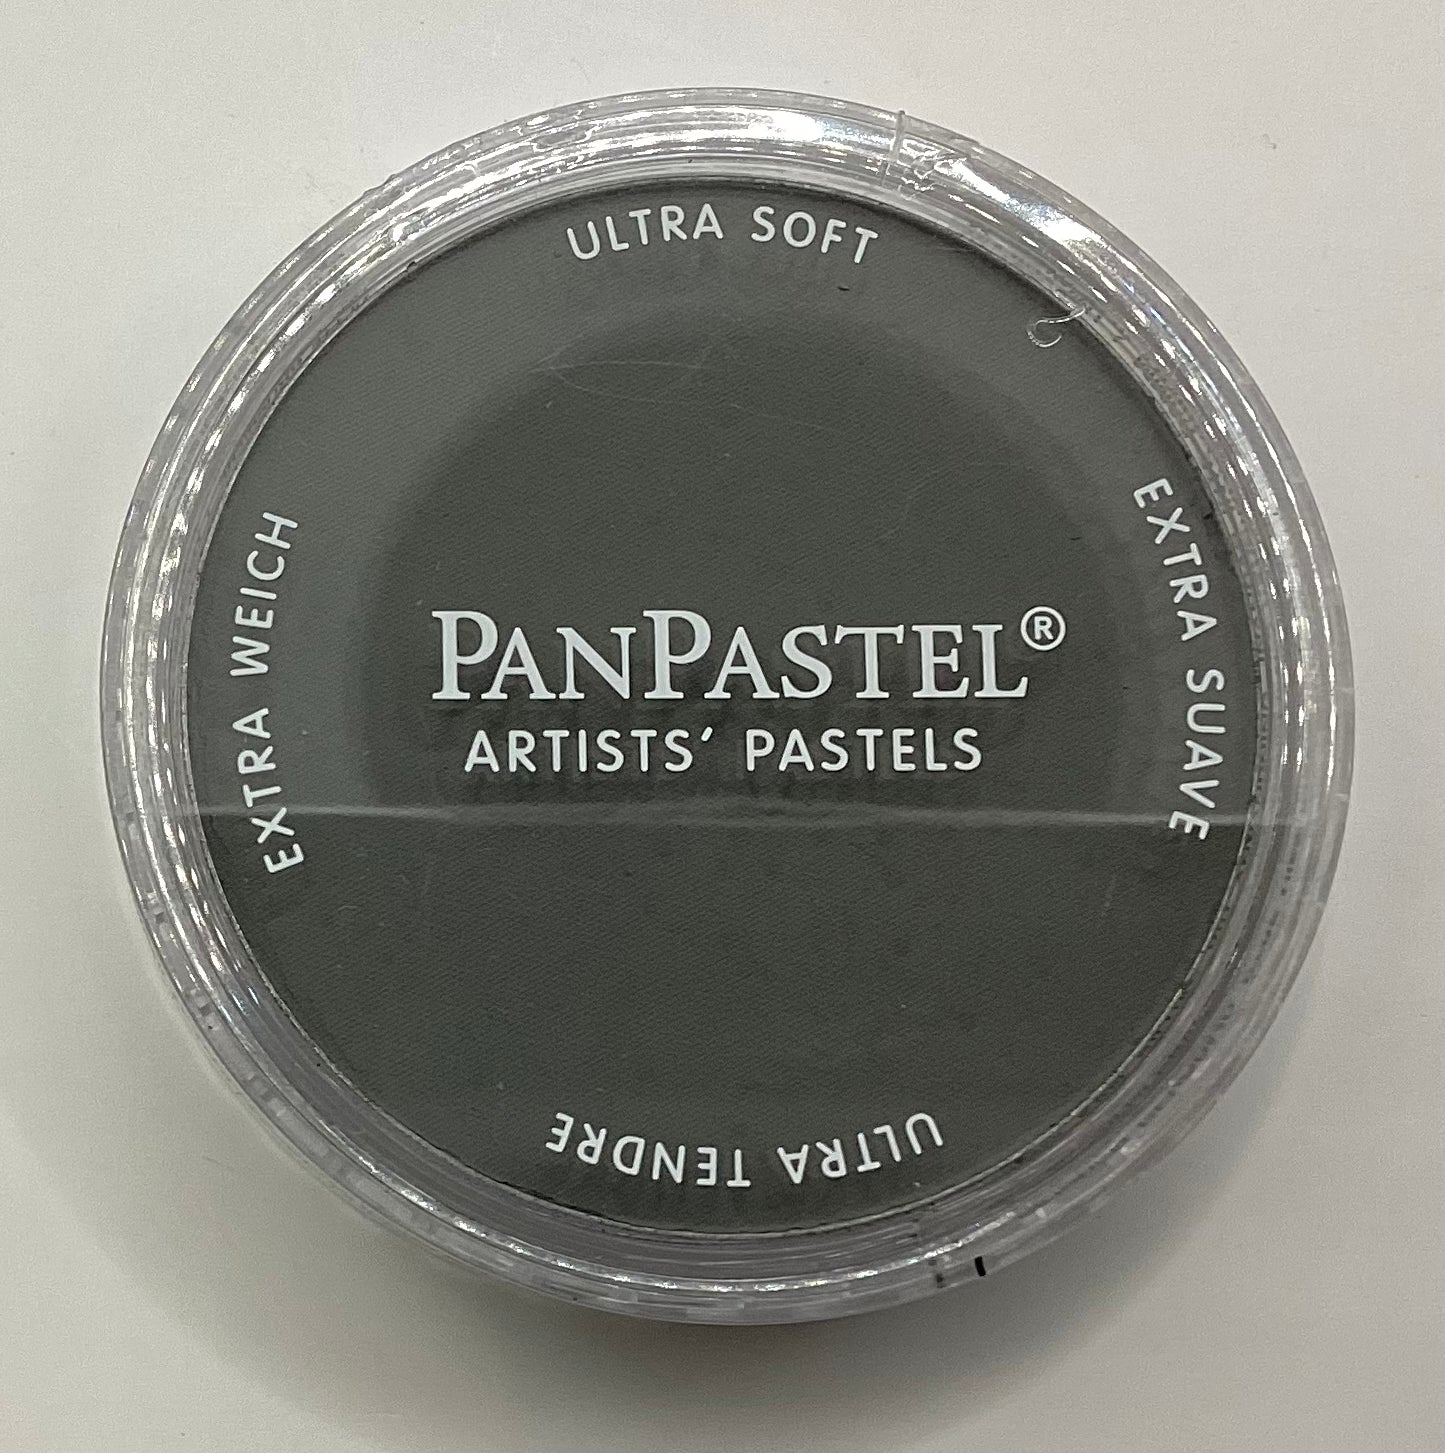 Golden PanPastel